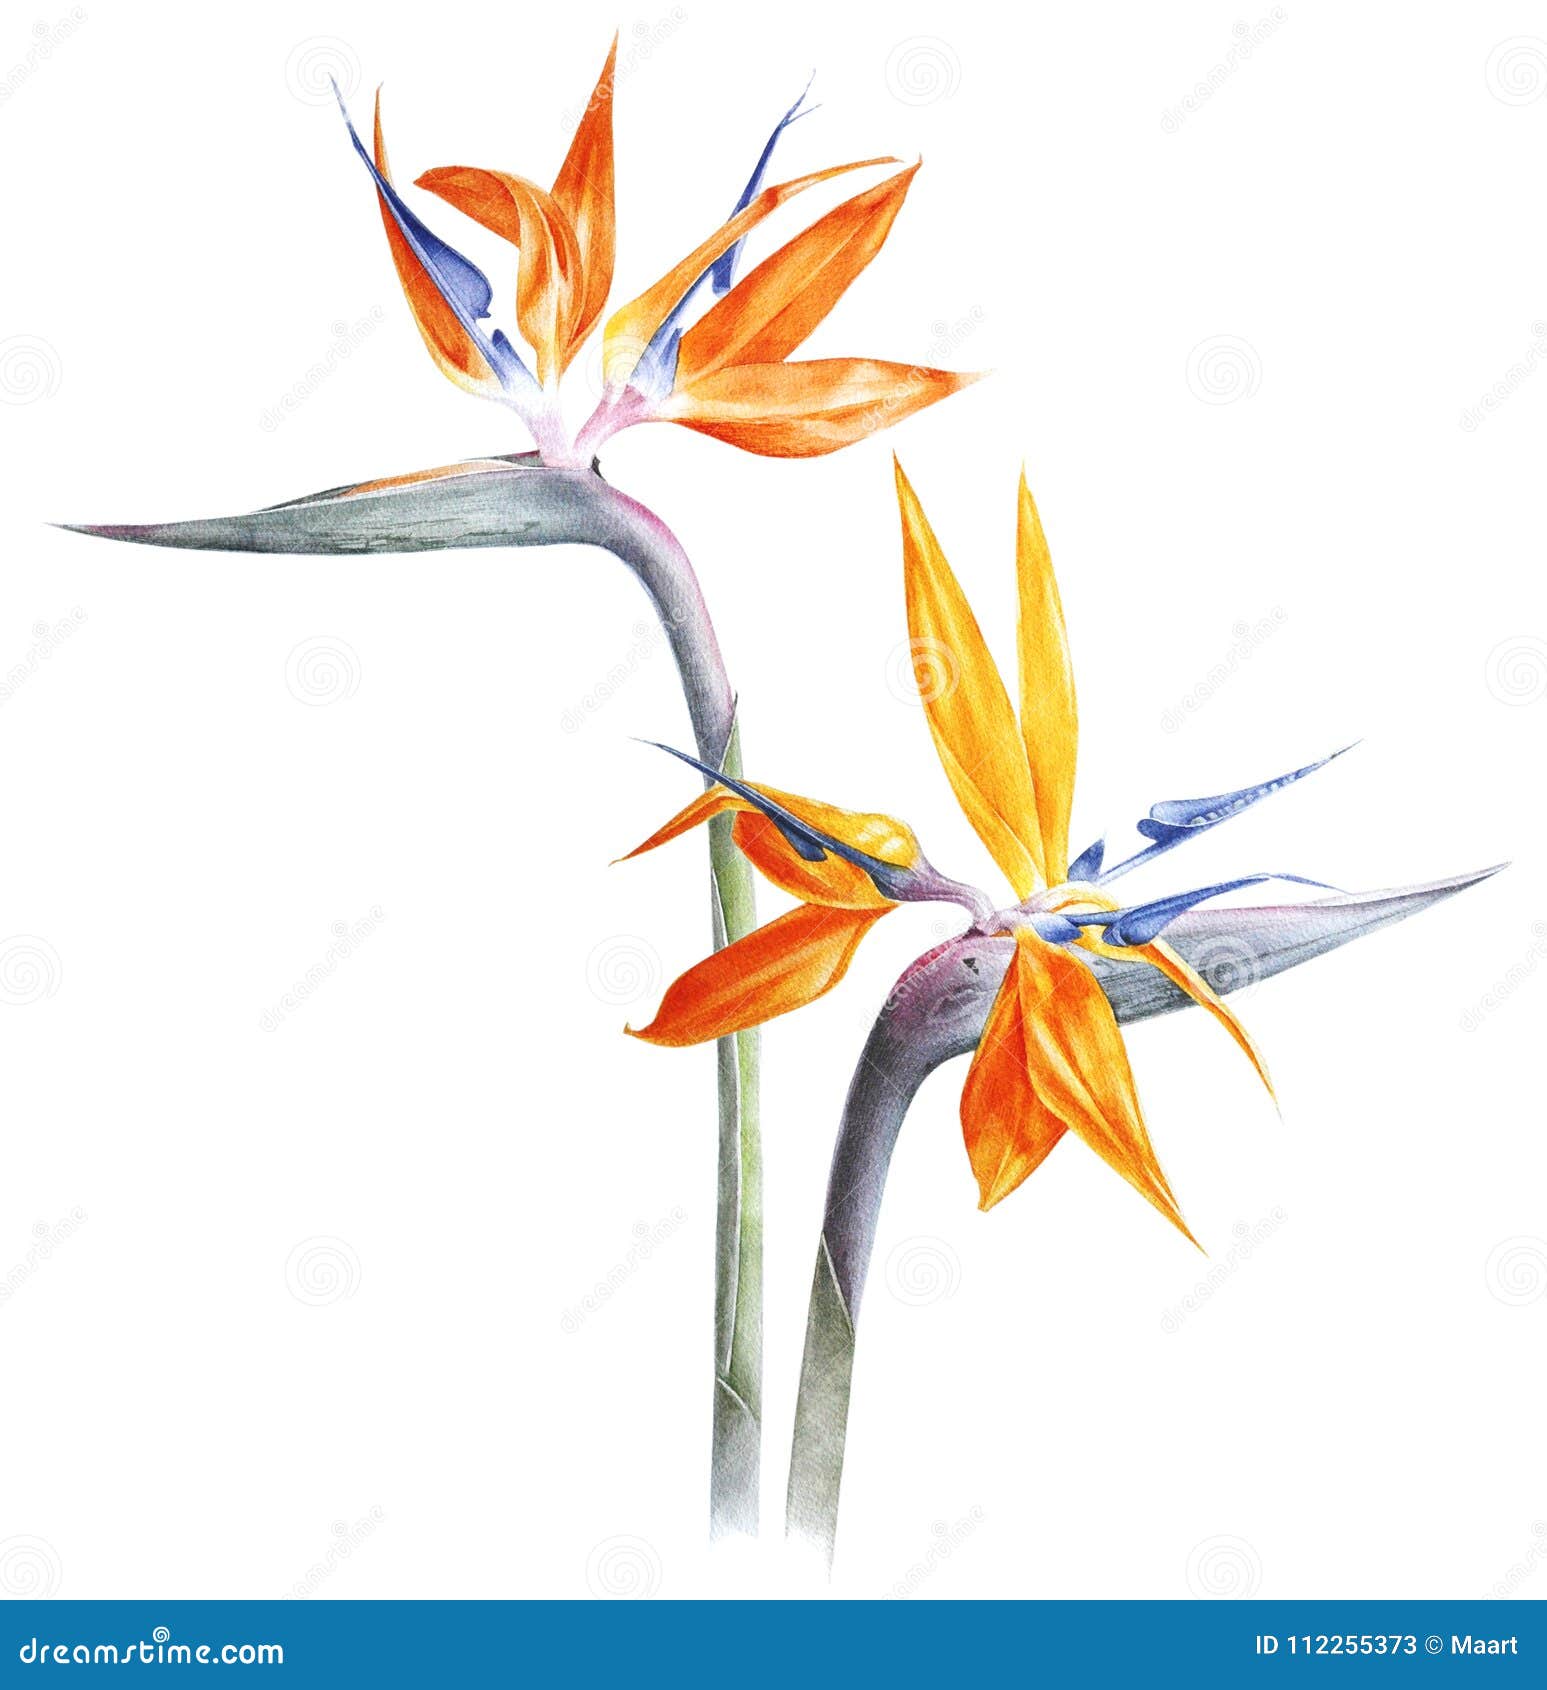 bird of paradise - strelitzia - flower watercolor